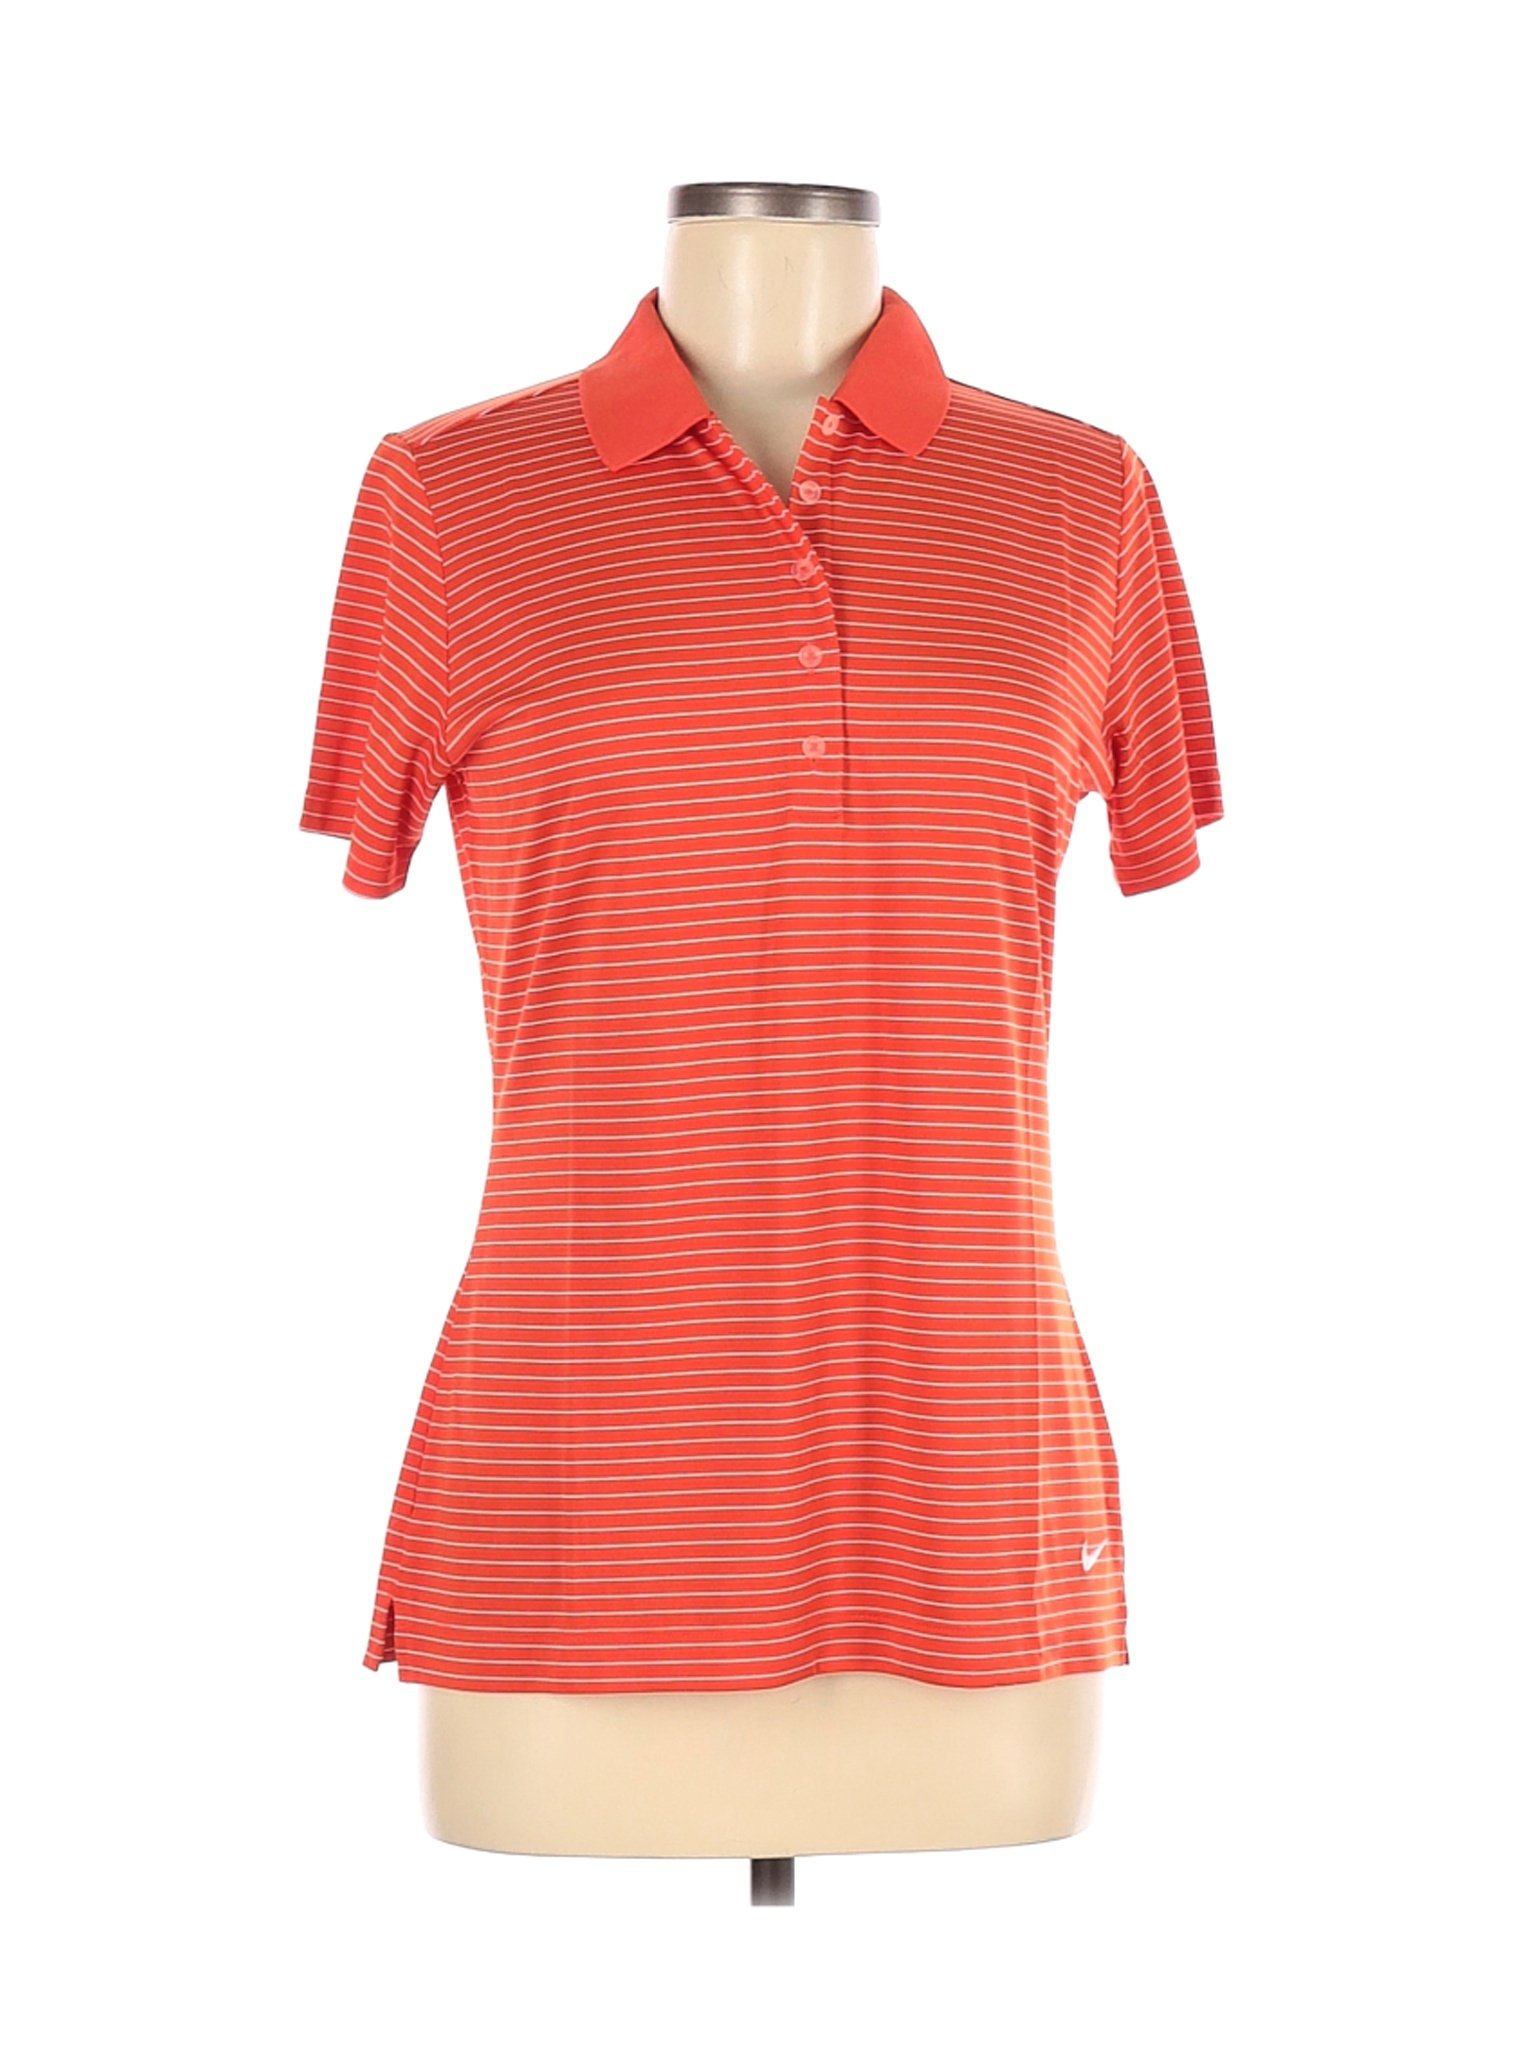 Nike Golf Women Pink Active T-Shirt M | eBay